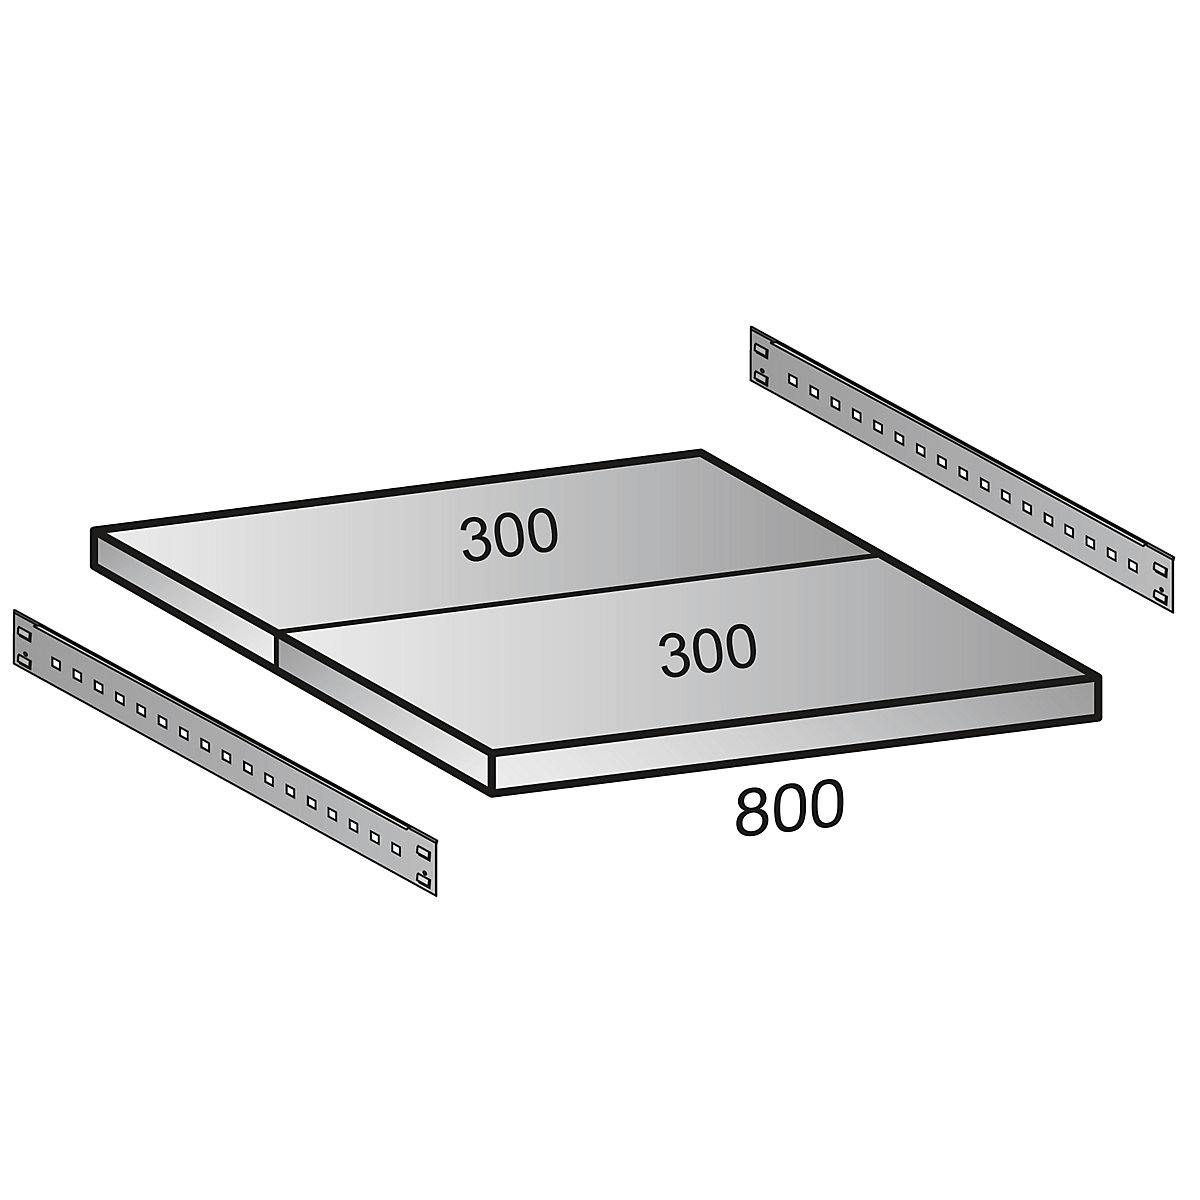 Shelf for industrial boltless shelf unit, shelf width 800 mm, depth 600 mm